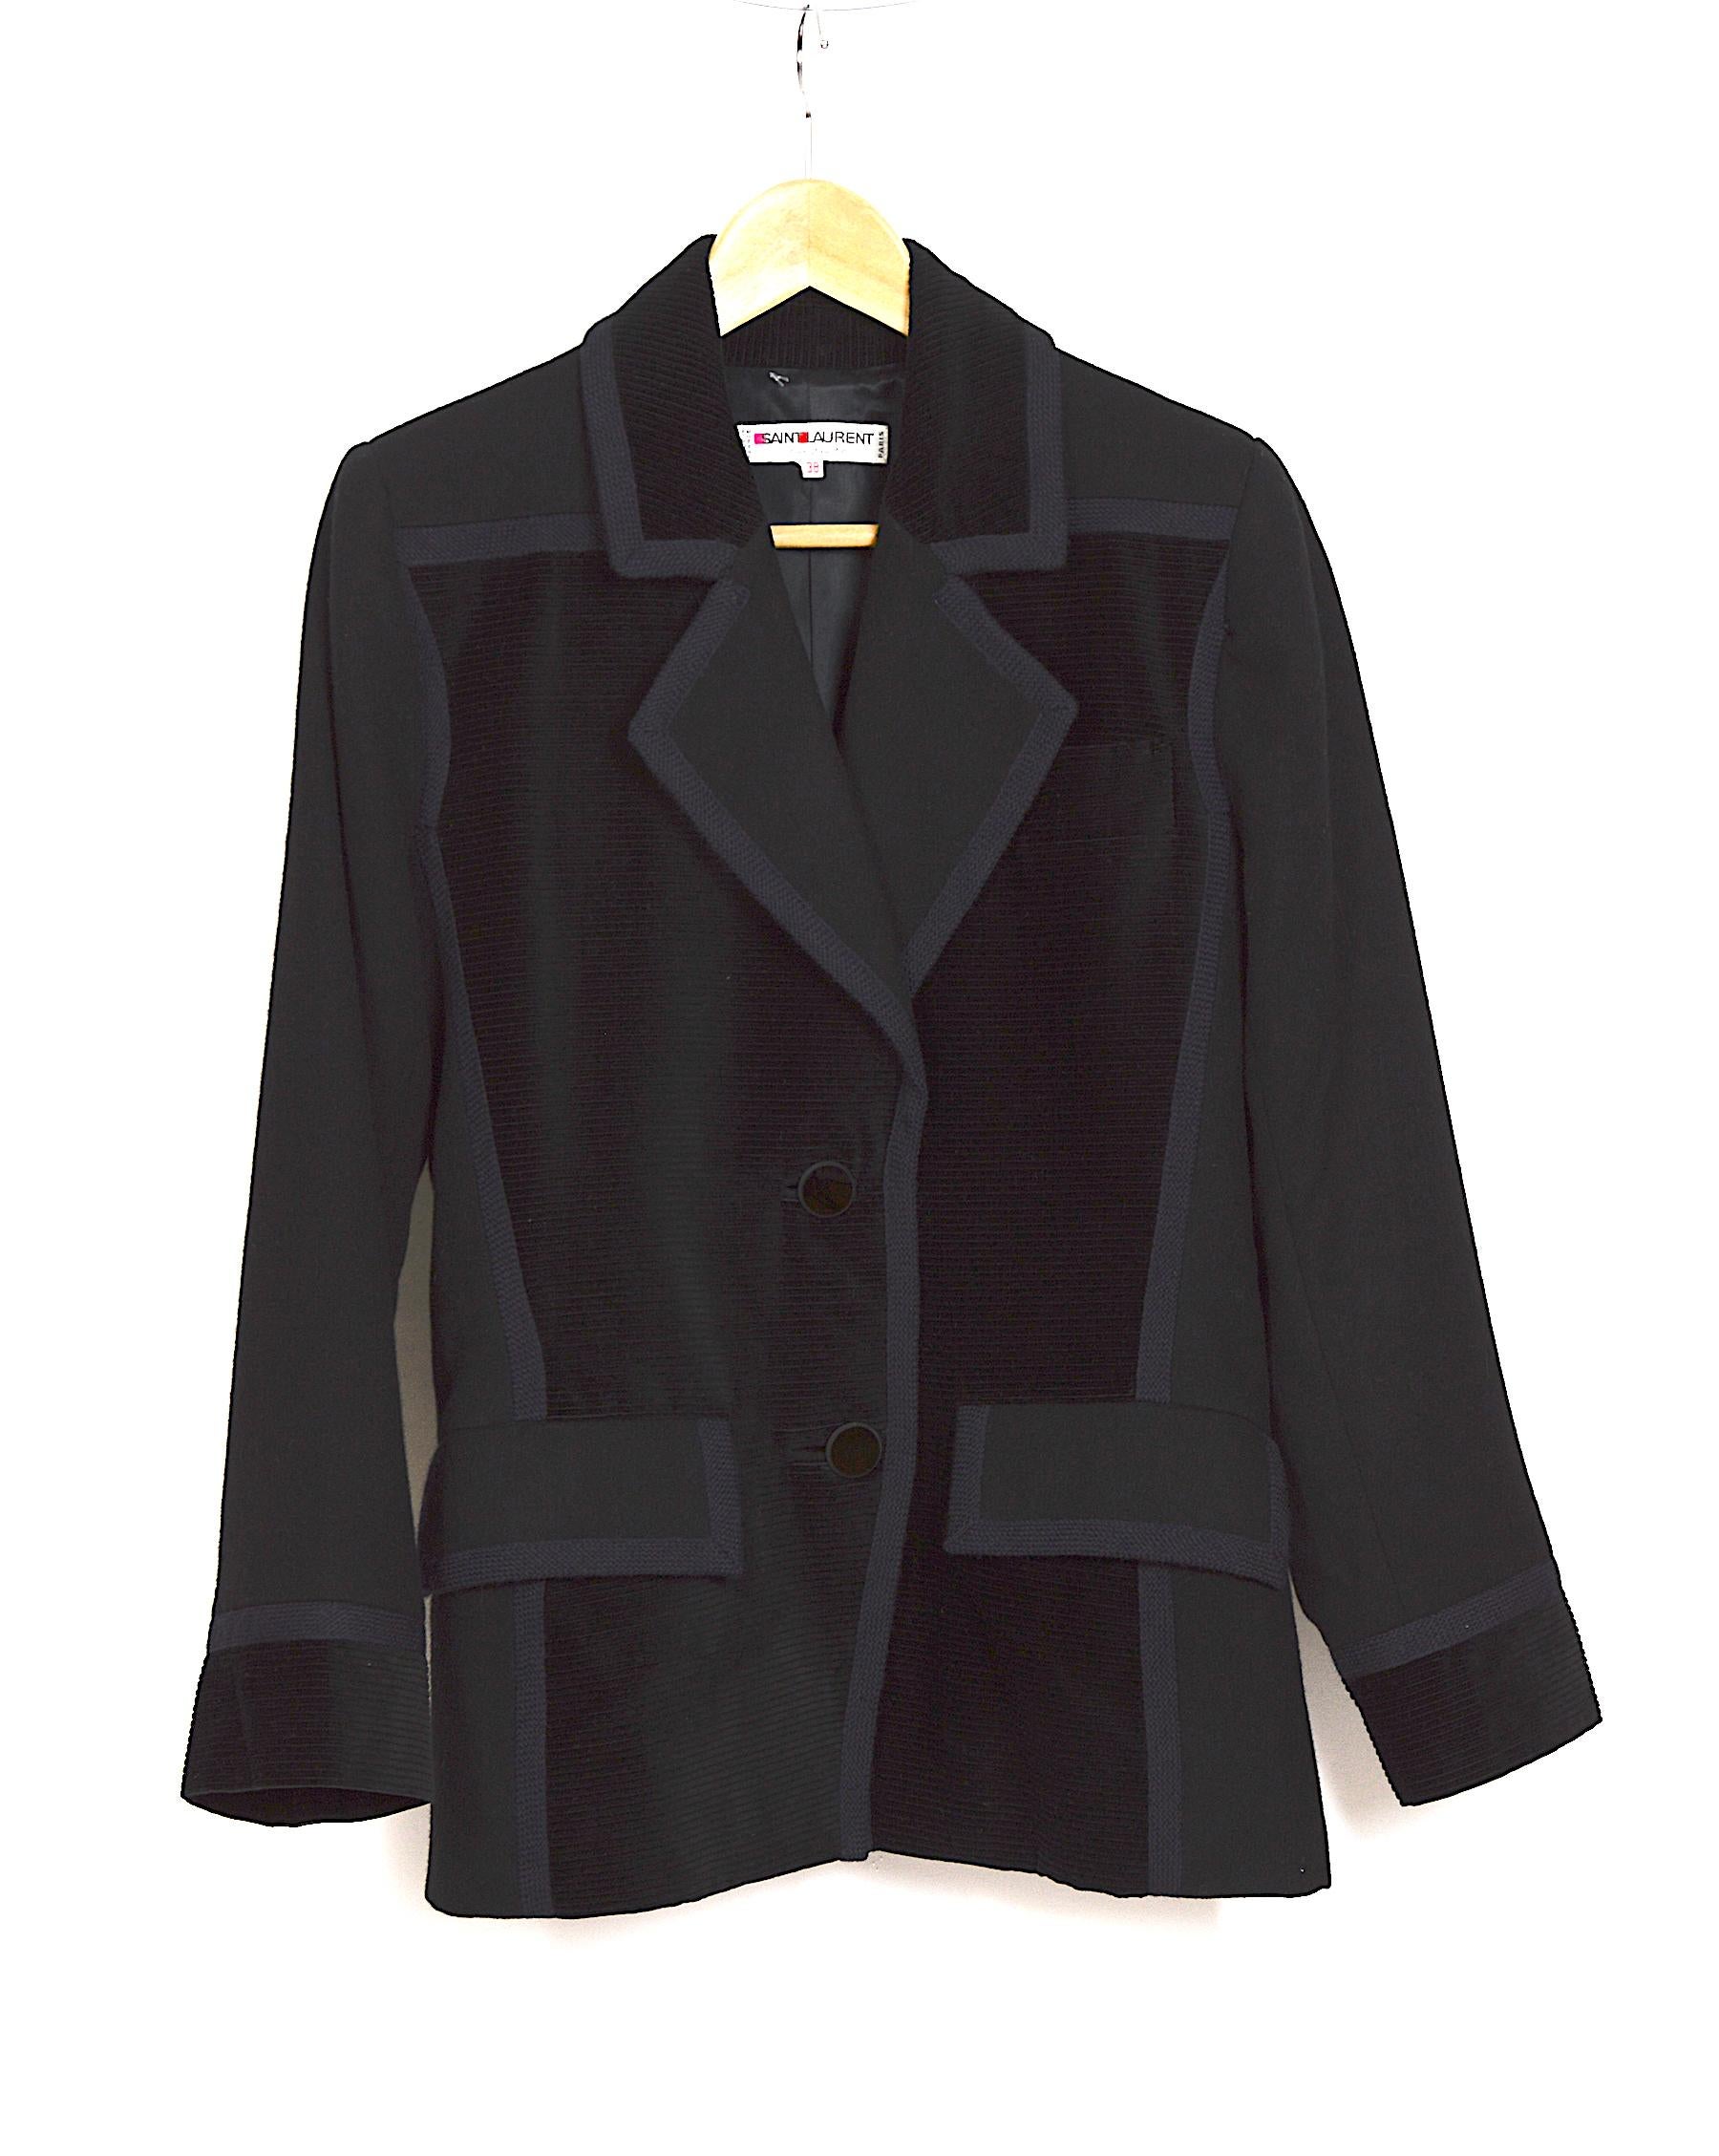 Yves Saint Laurent 1980s vintage black wool and velvet jacket 1